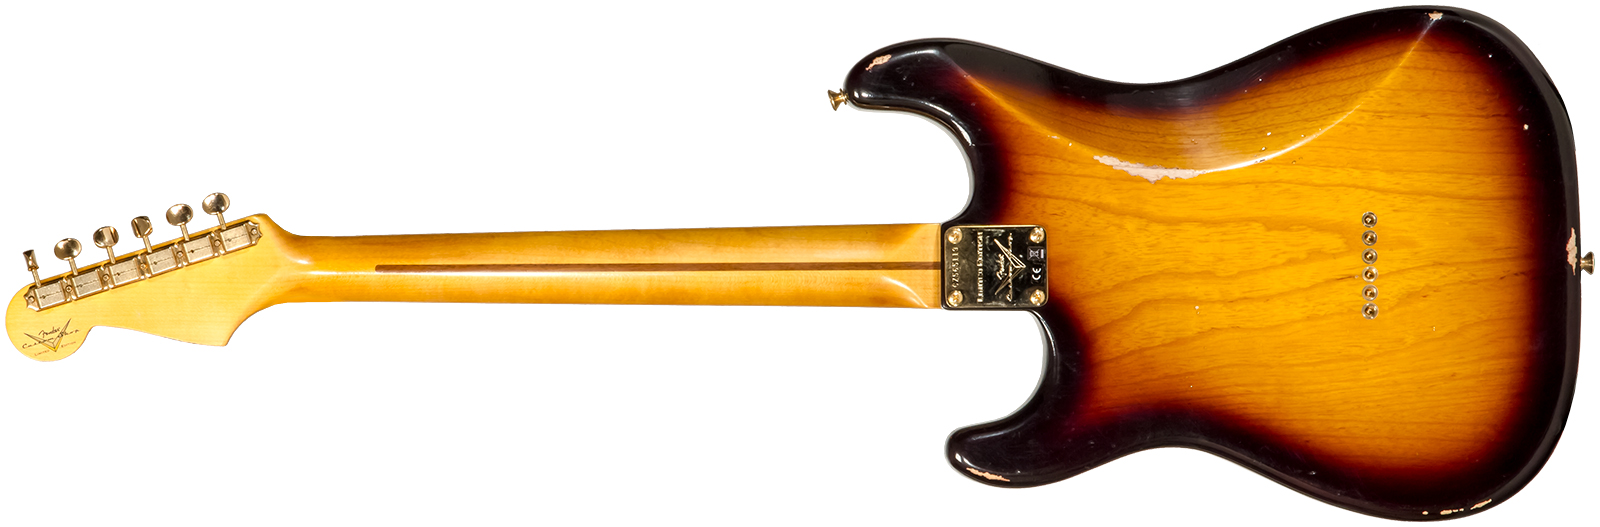 Fender Custom Shop Strat 1956 Hardtail Gold Hardware 3s Ht Mn #cz565119 - Relic Faded 2-color Sunburst - Guitare Électrique Forme Str - Variation 1